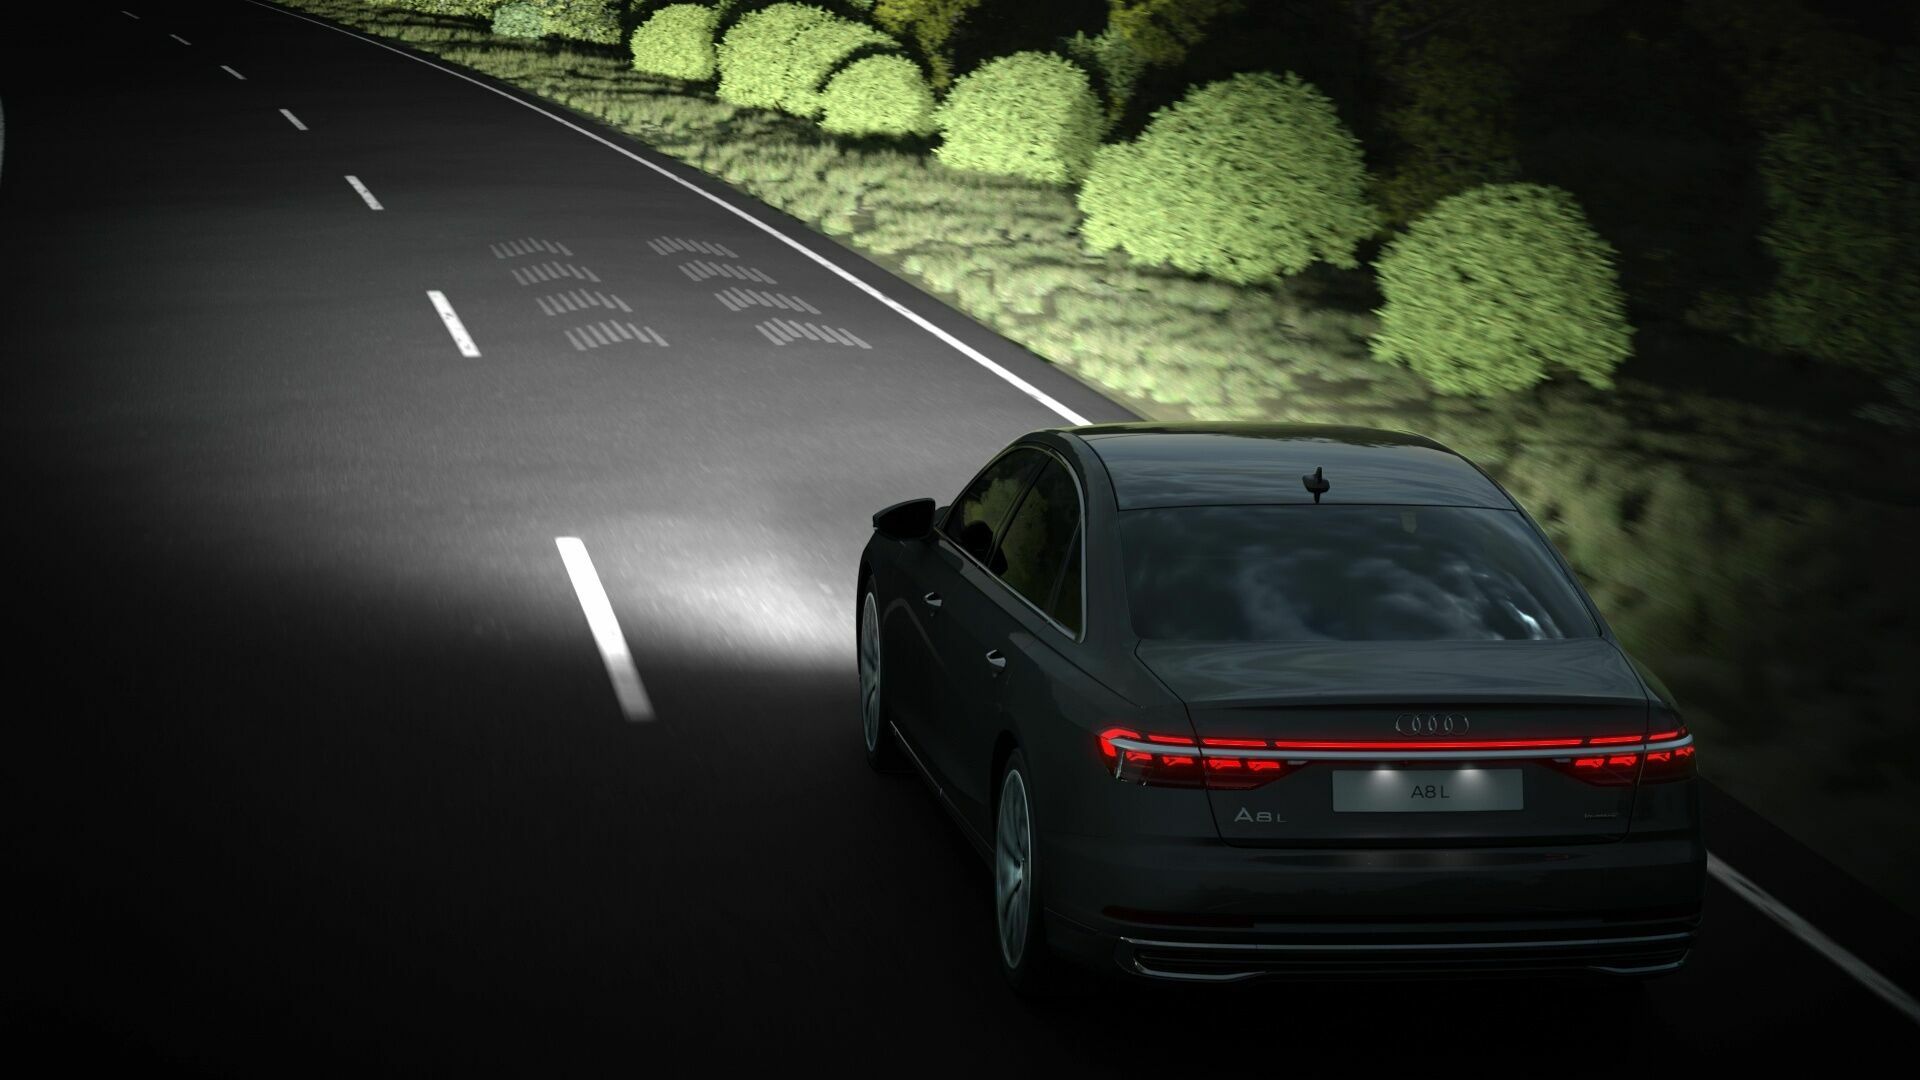 Animation: Digitale Matrix LED- und digitale OLED-Technologie im neuen Audi A8 L